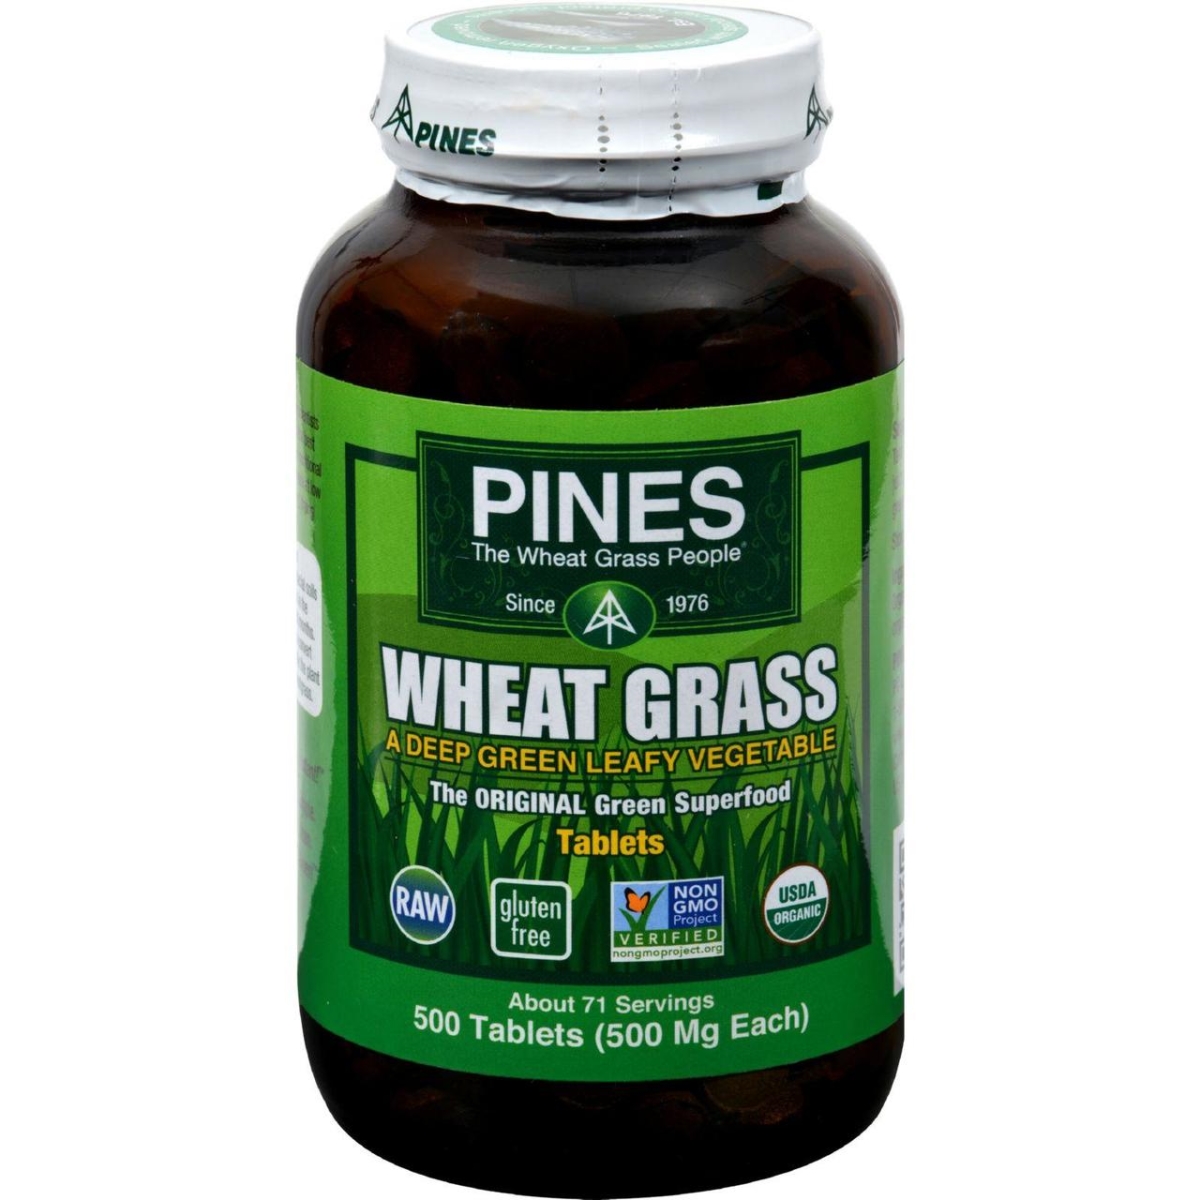 Hg0716027 500 Mg Wheat Grass - 500 Tablets